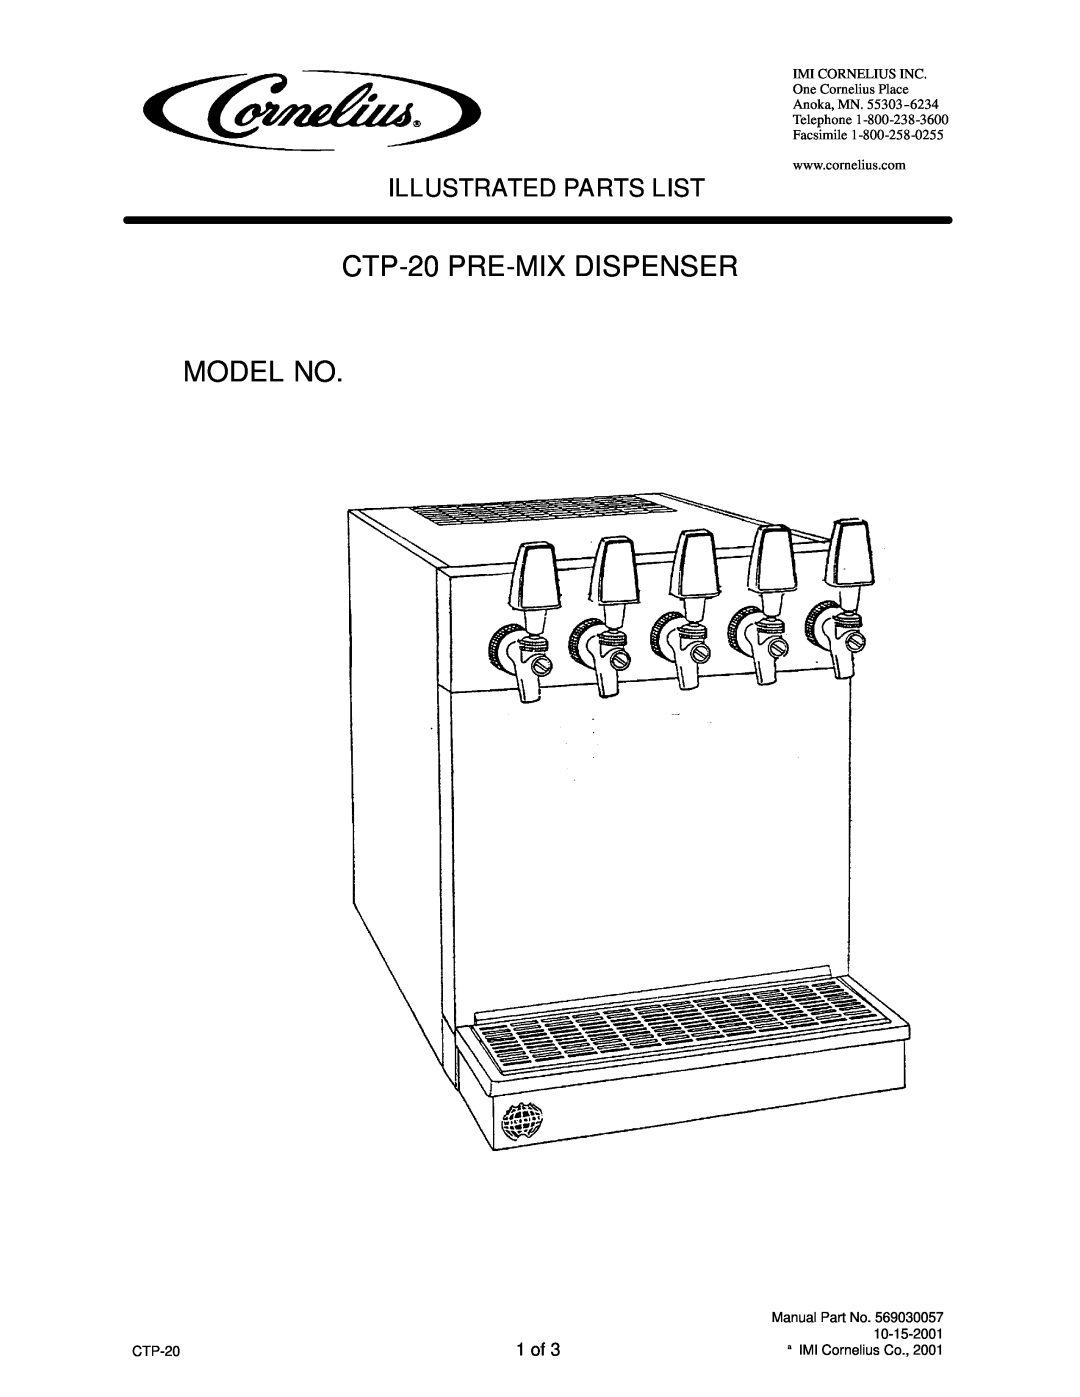 Cornelius manual CTP-20 PRE-MIXDISPENSER MODEL NO, Illustrated Parts List, 1 of 